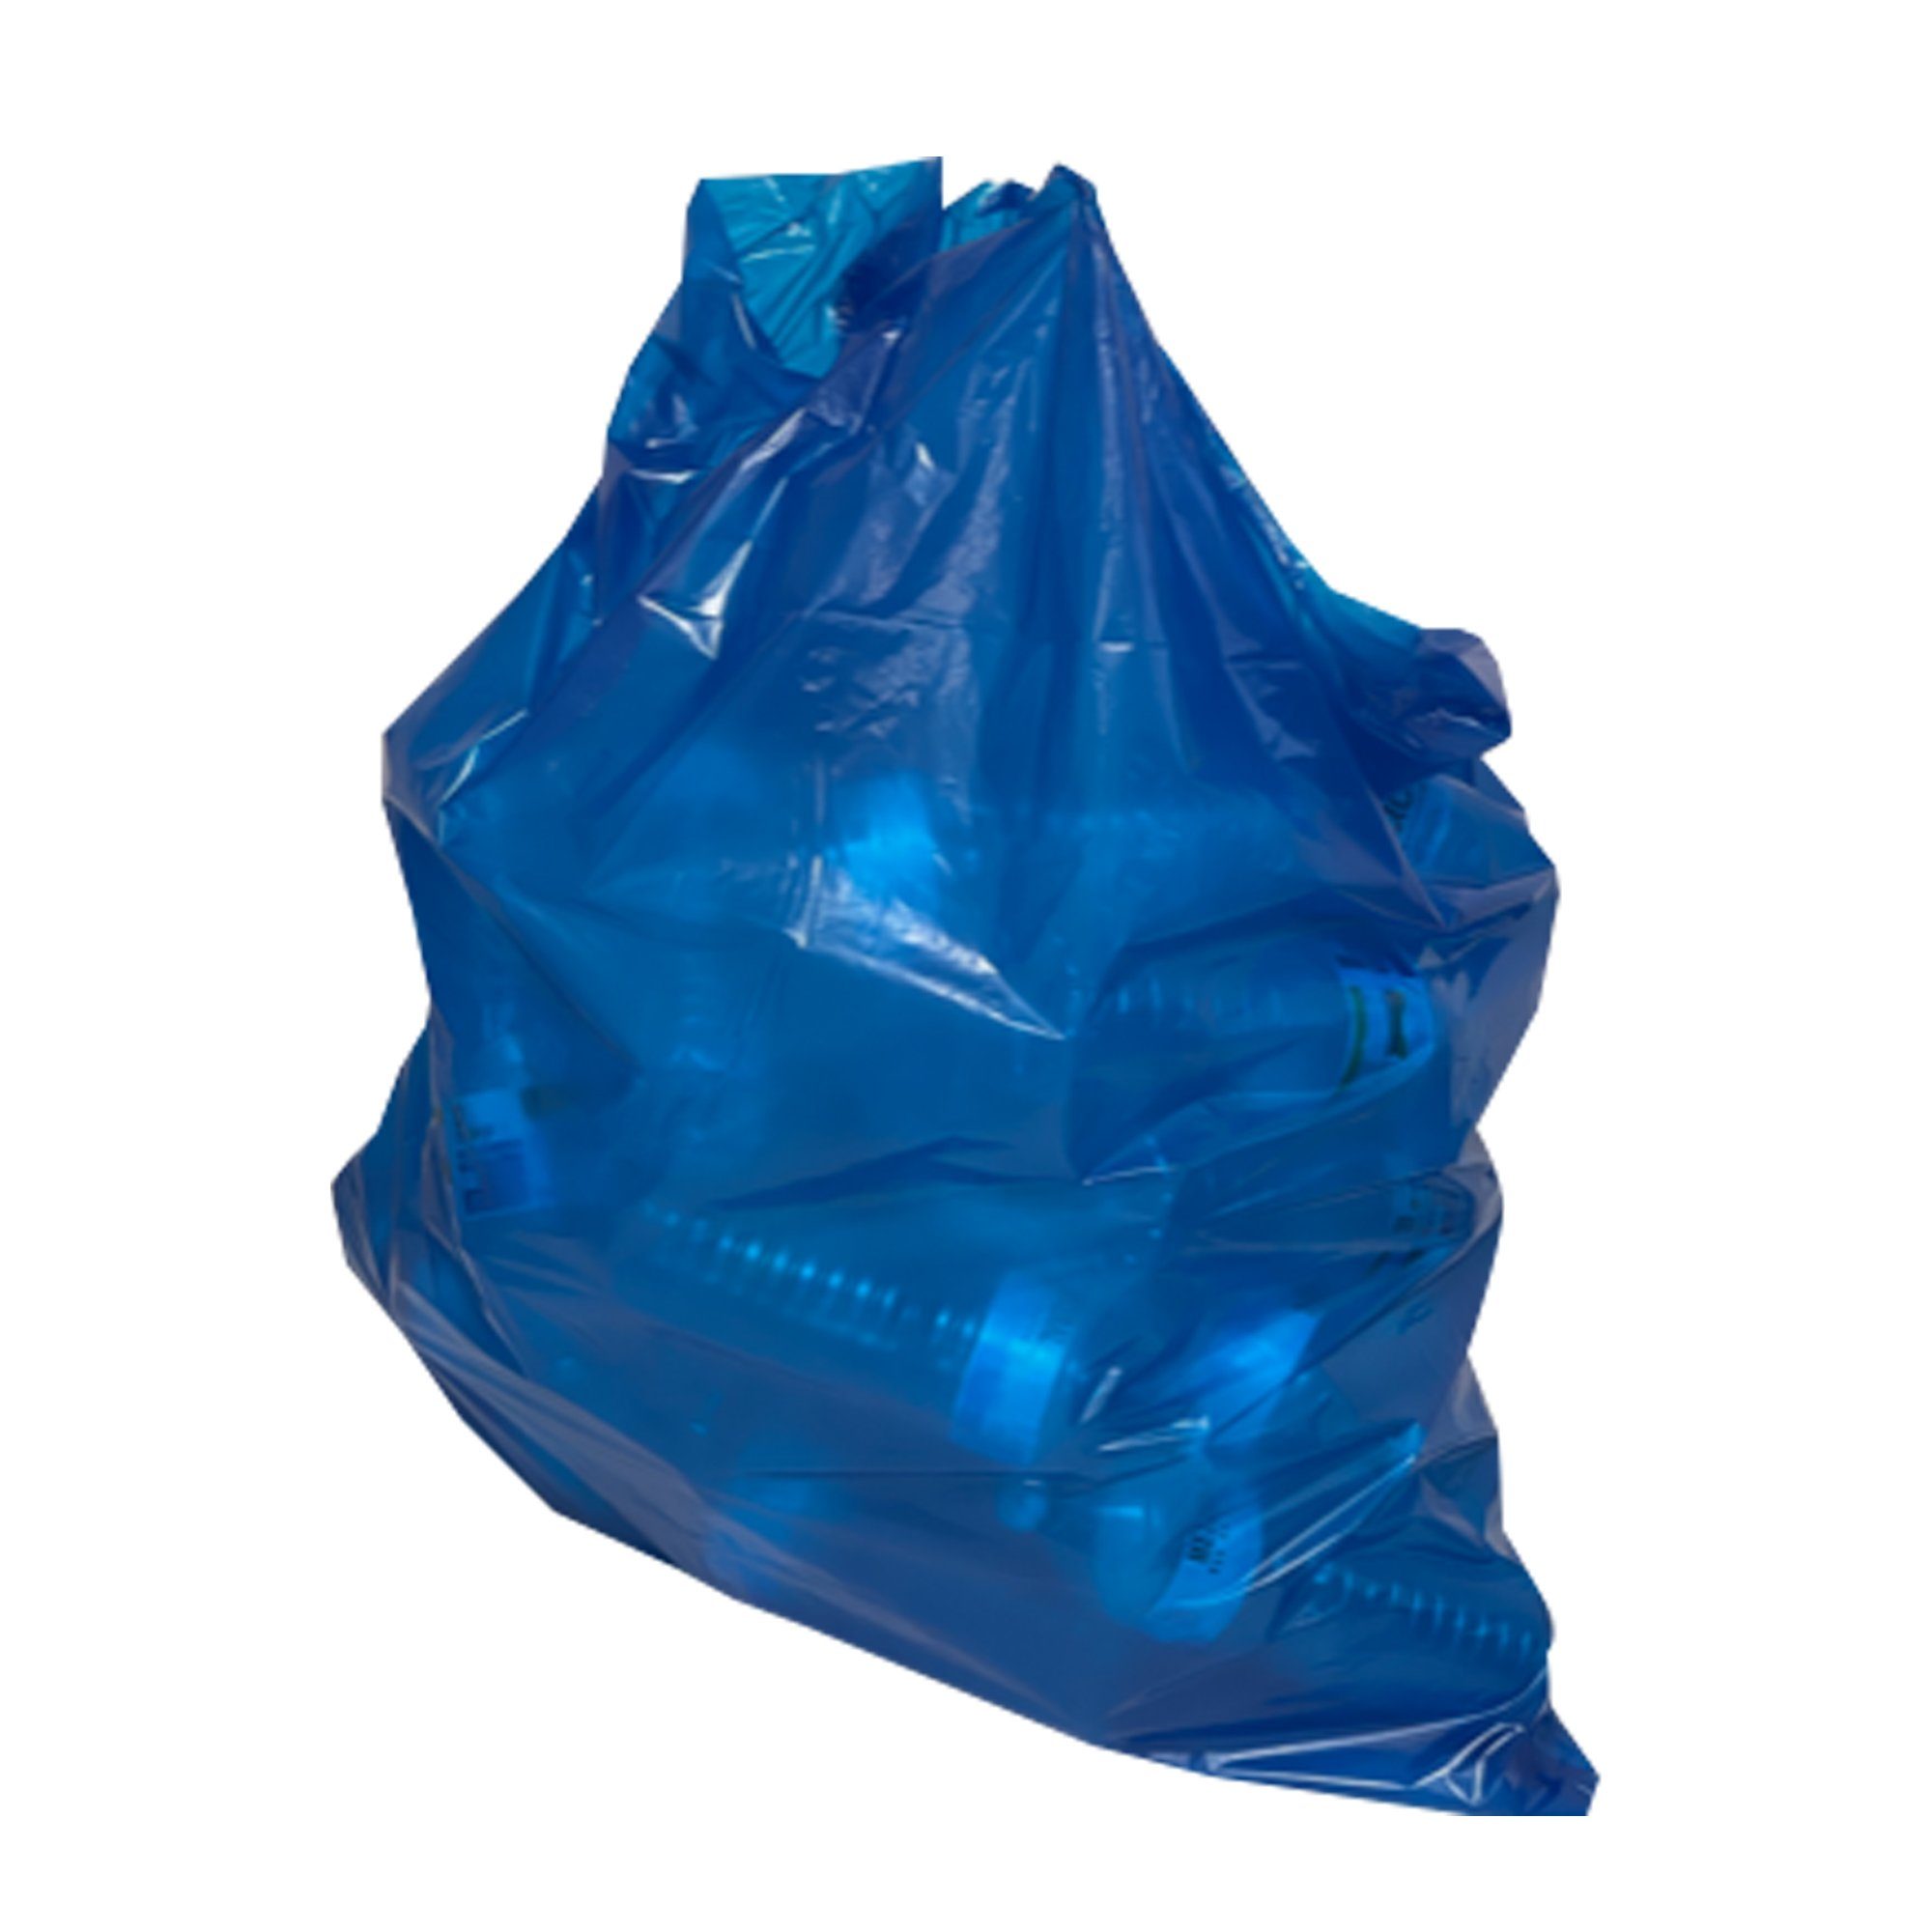 VaGo-Tools Mülleimer Müllsäcke Abdfallsäcke extra stark blau 30 St. 20L